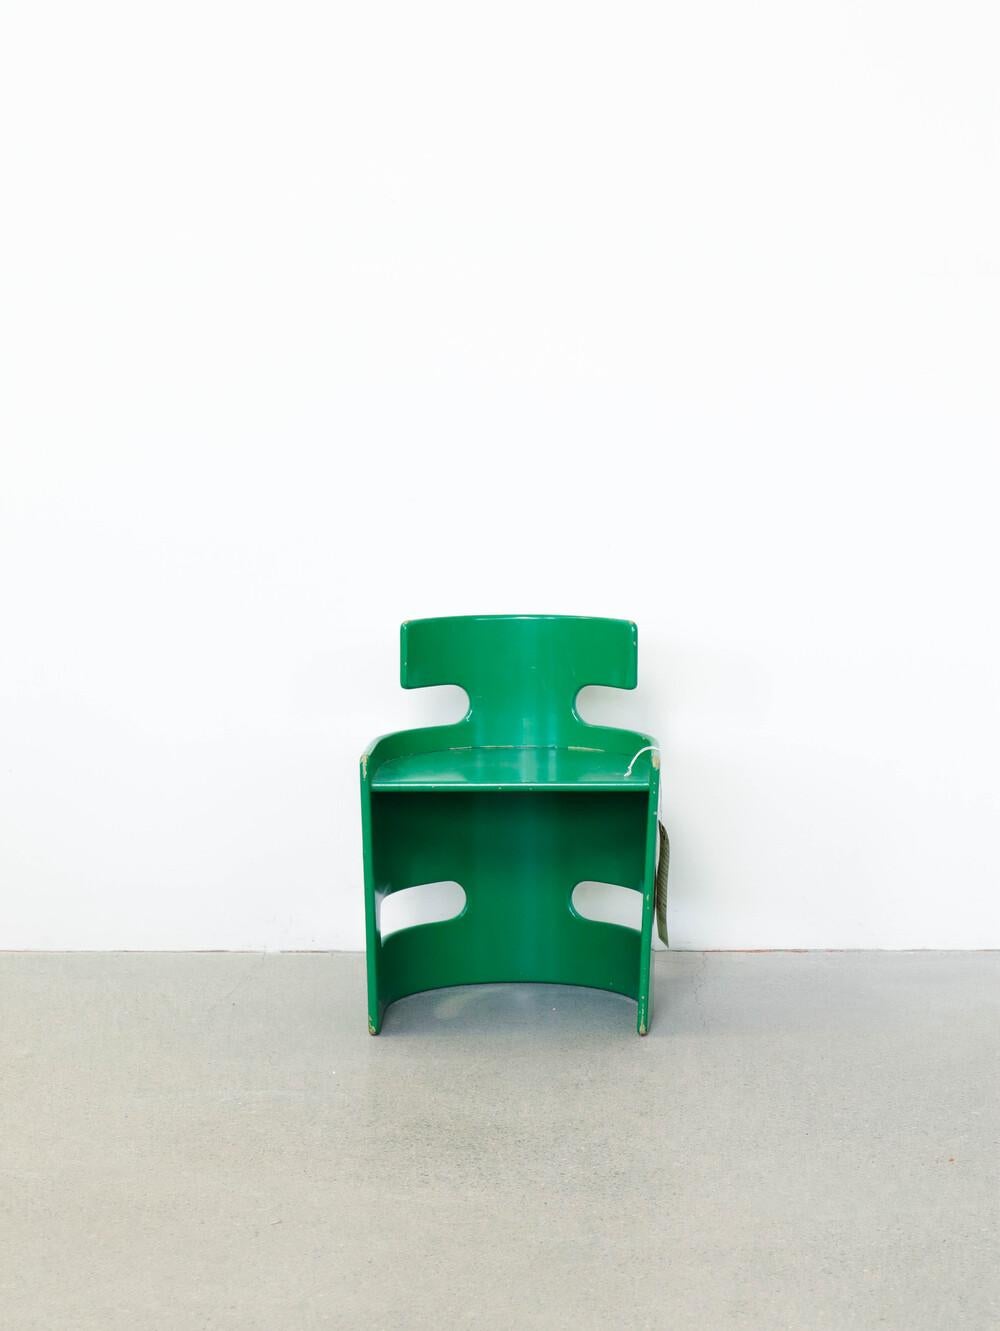 Swedish made green vintage child chair.